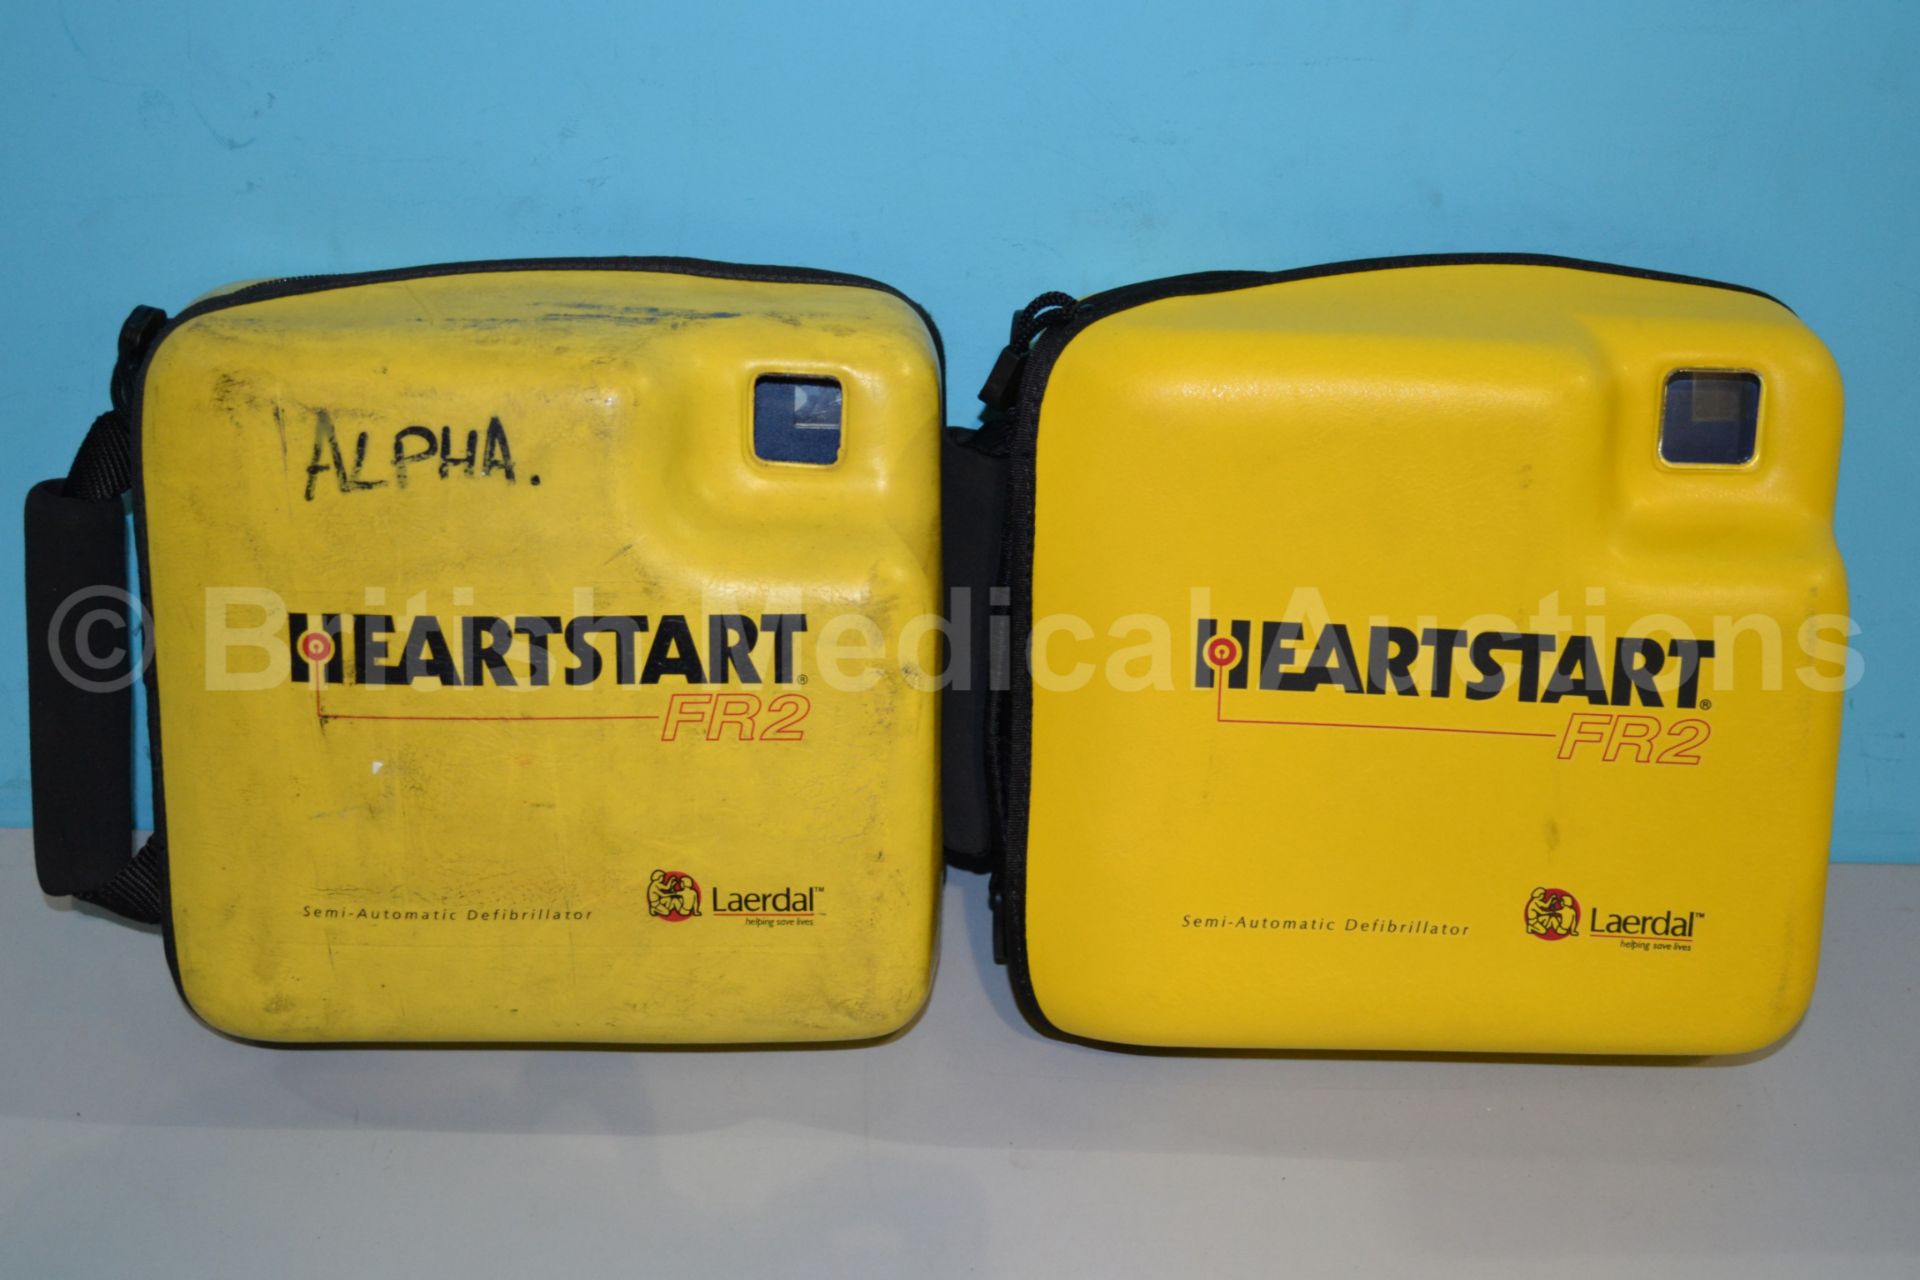 2 x Laerdal Heartstart FR2 Defibrillators in Yello - Image 2 of 2